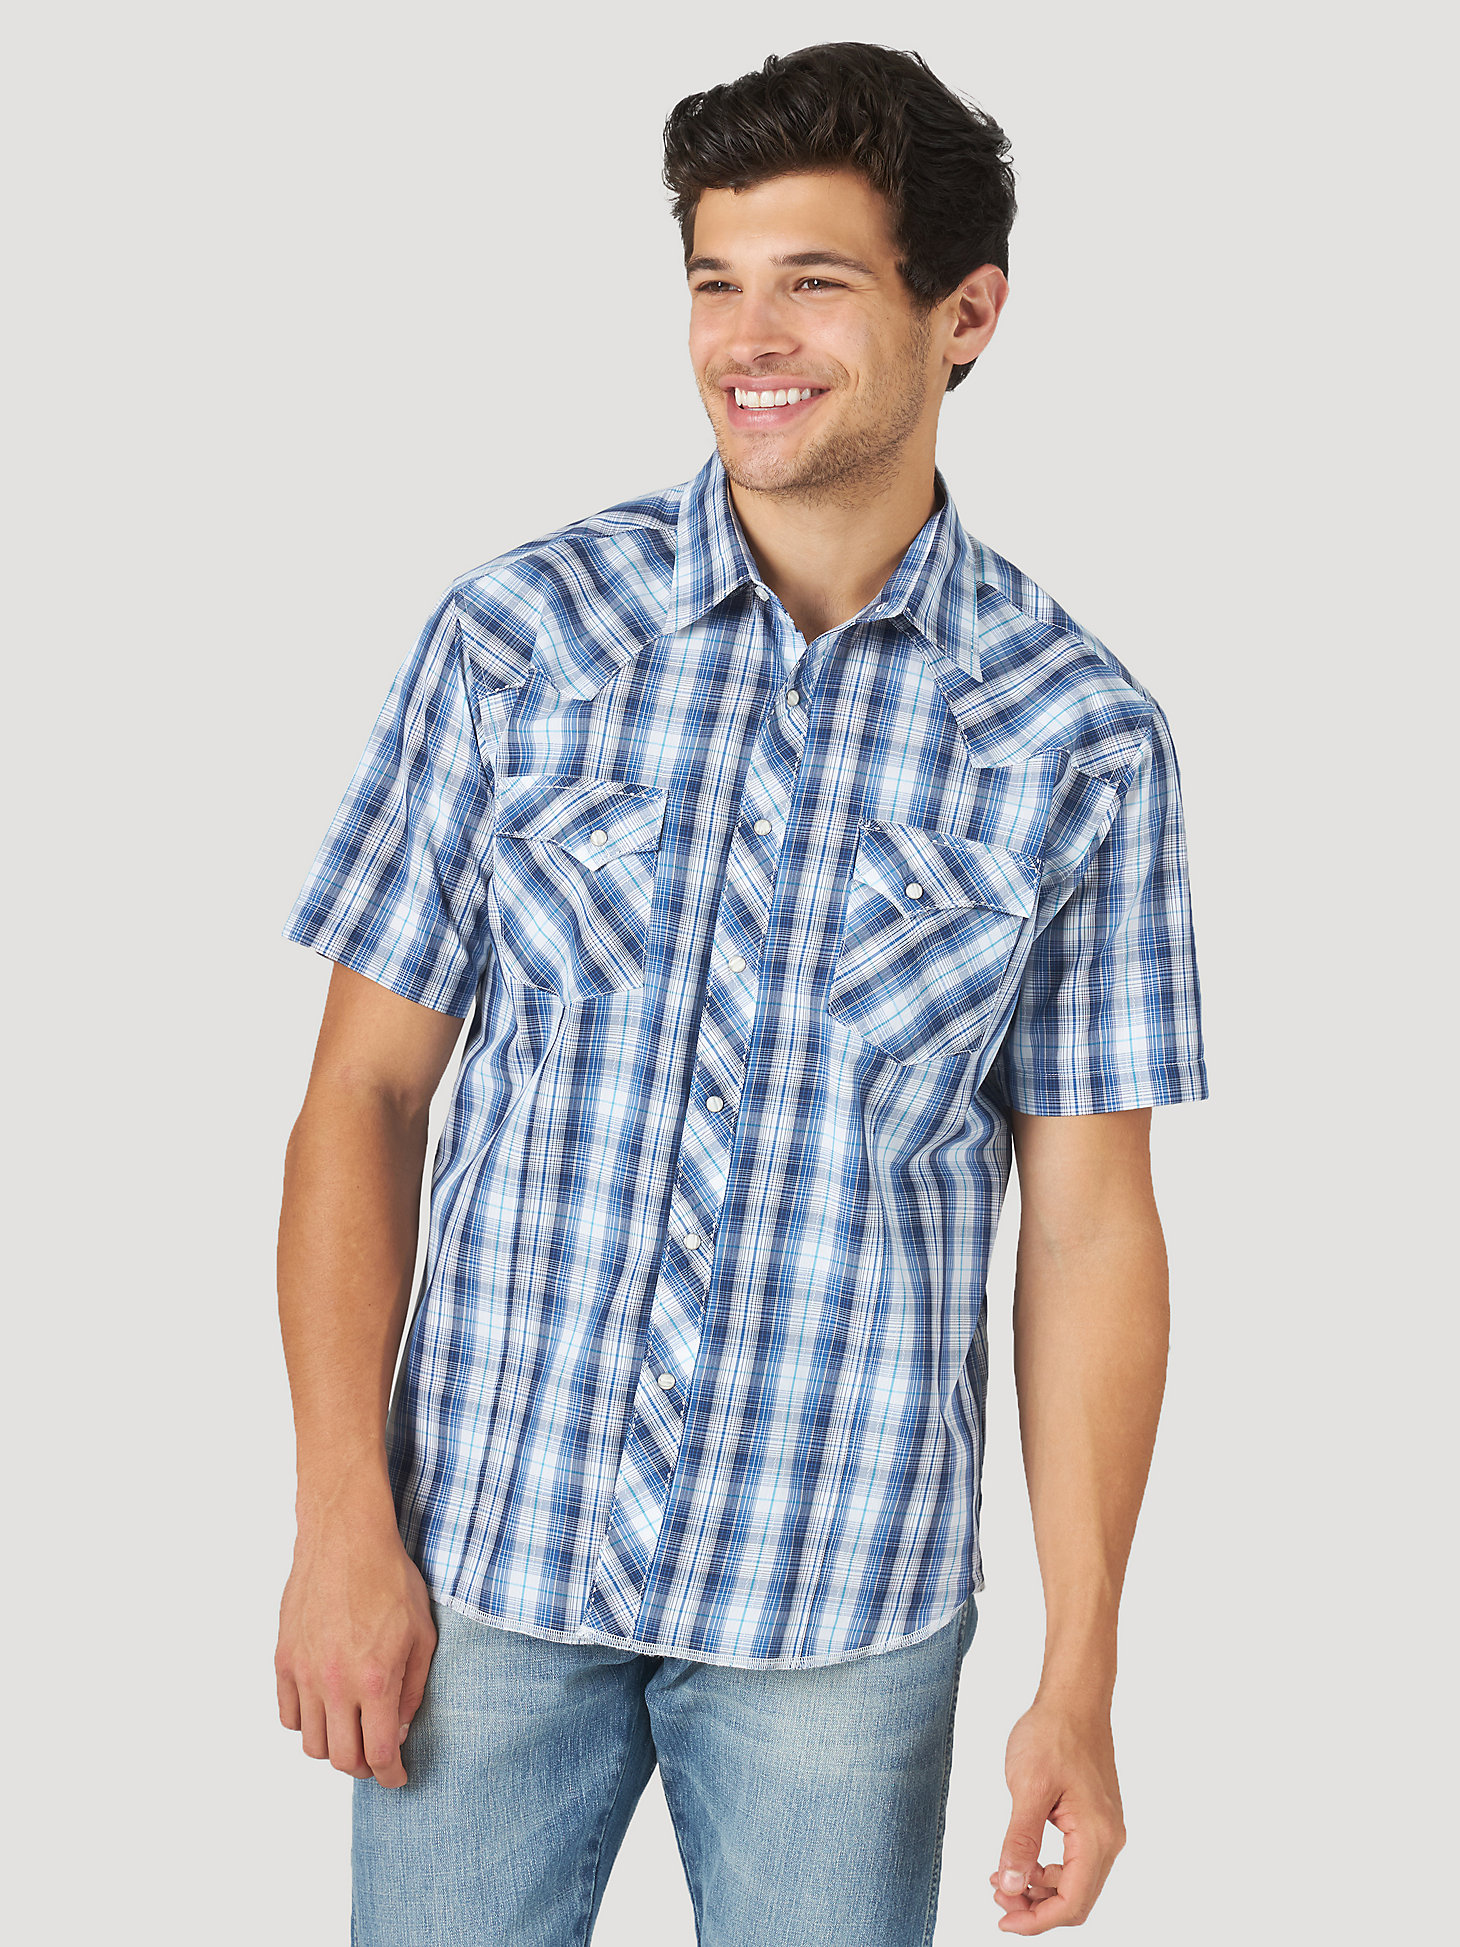 Men Fashion Dress Shirt Cotton Short Sleeve Plaid Slim Fit Button Down Shirt 